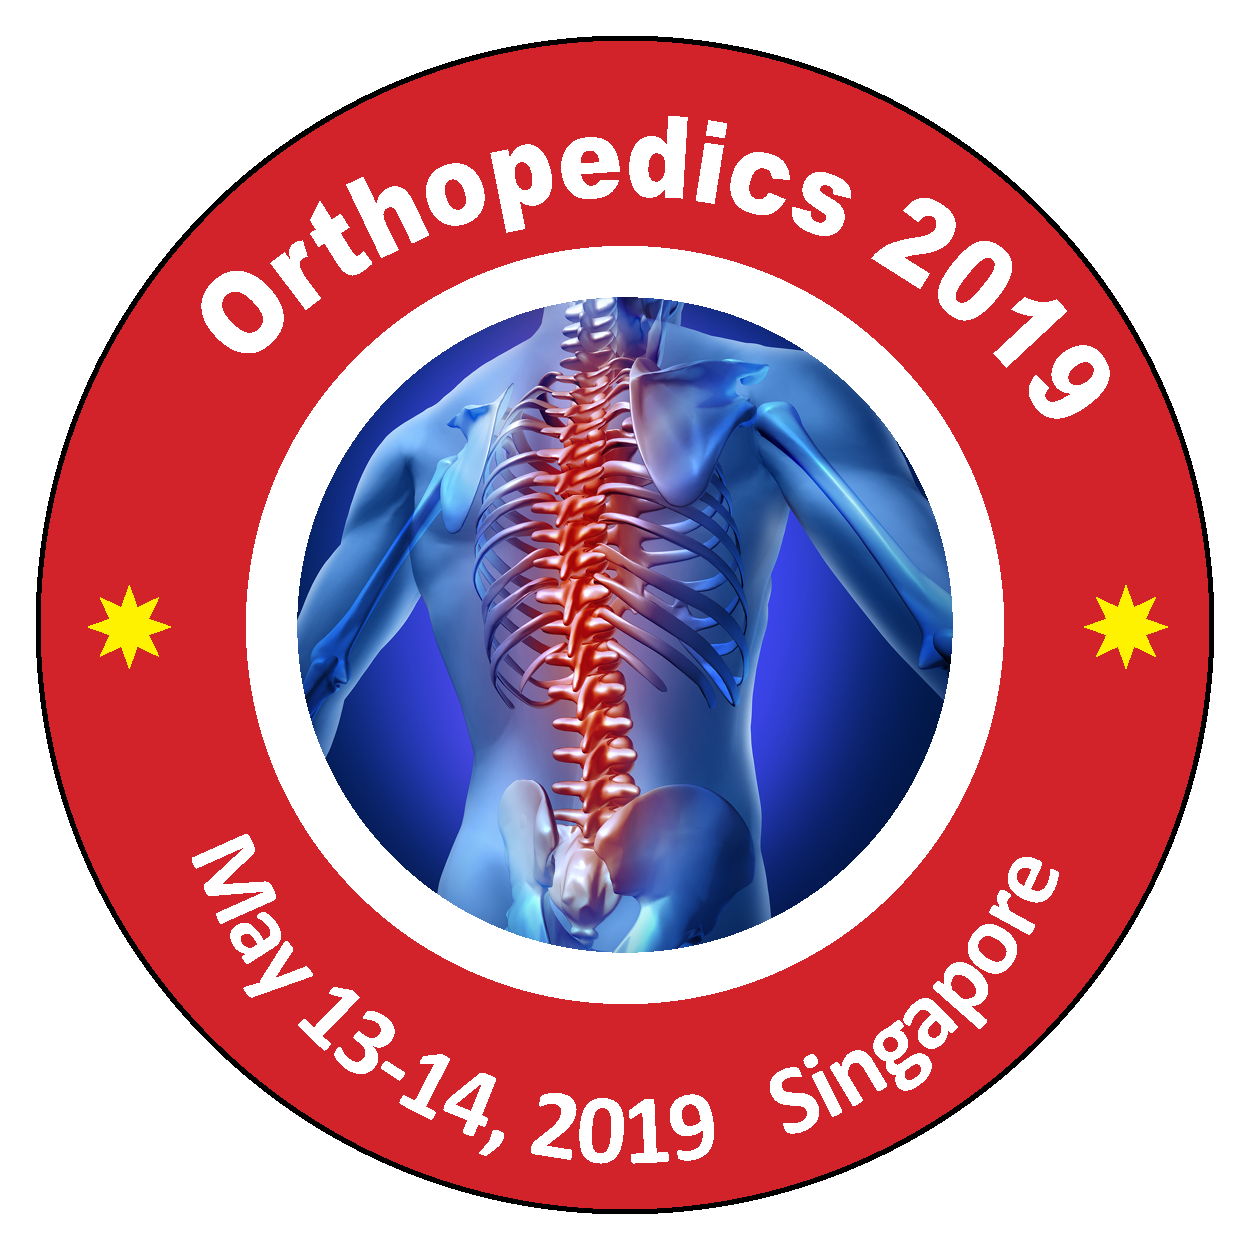 12th International Conference on Orthopedics, Trauma & Rheumatology